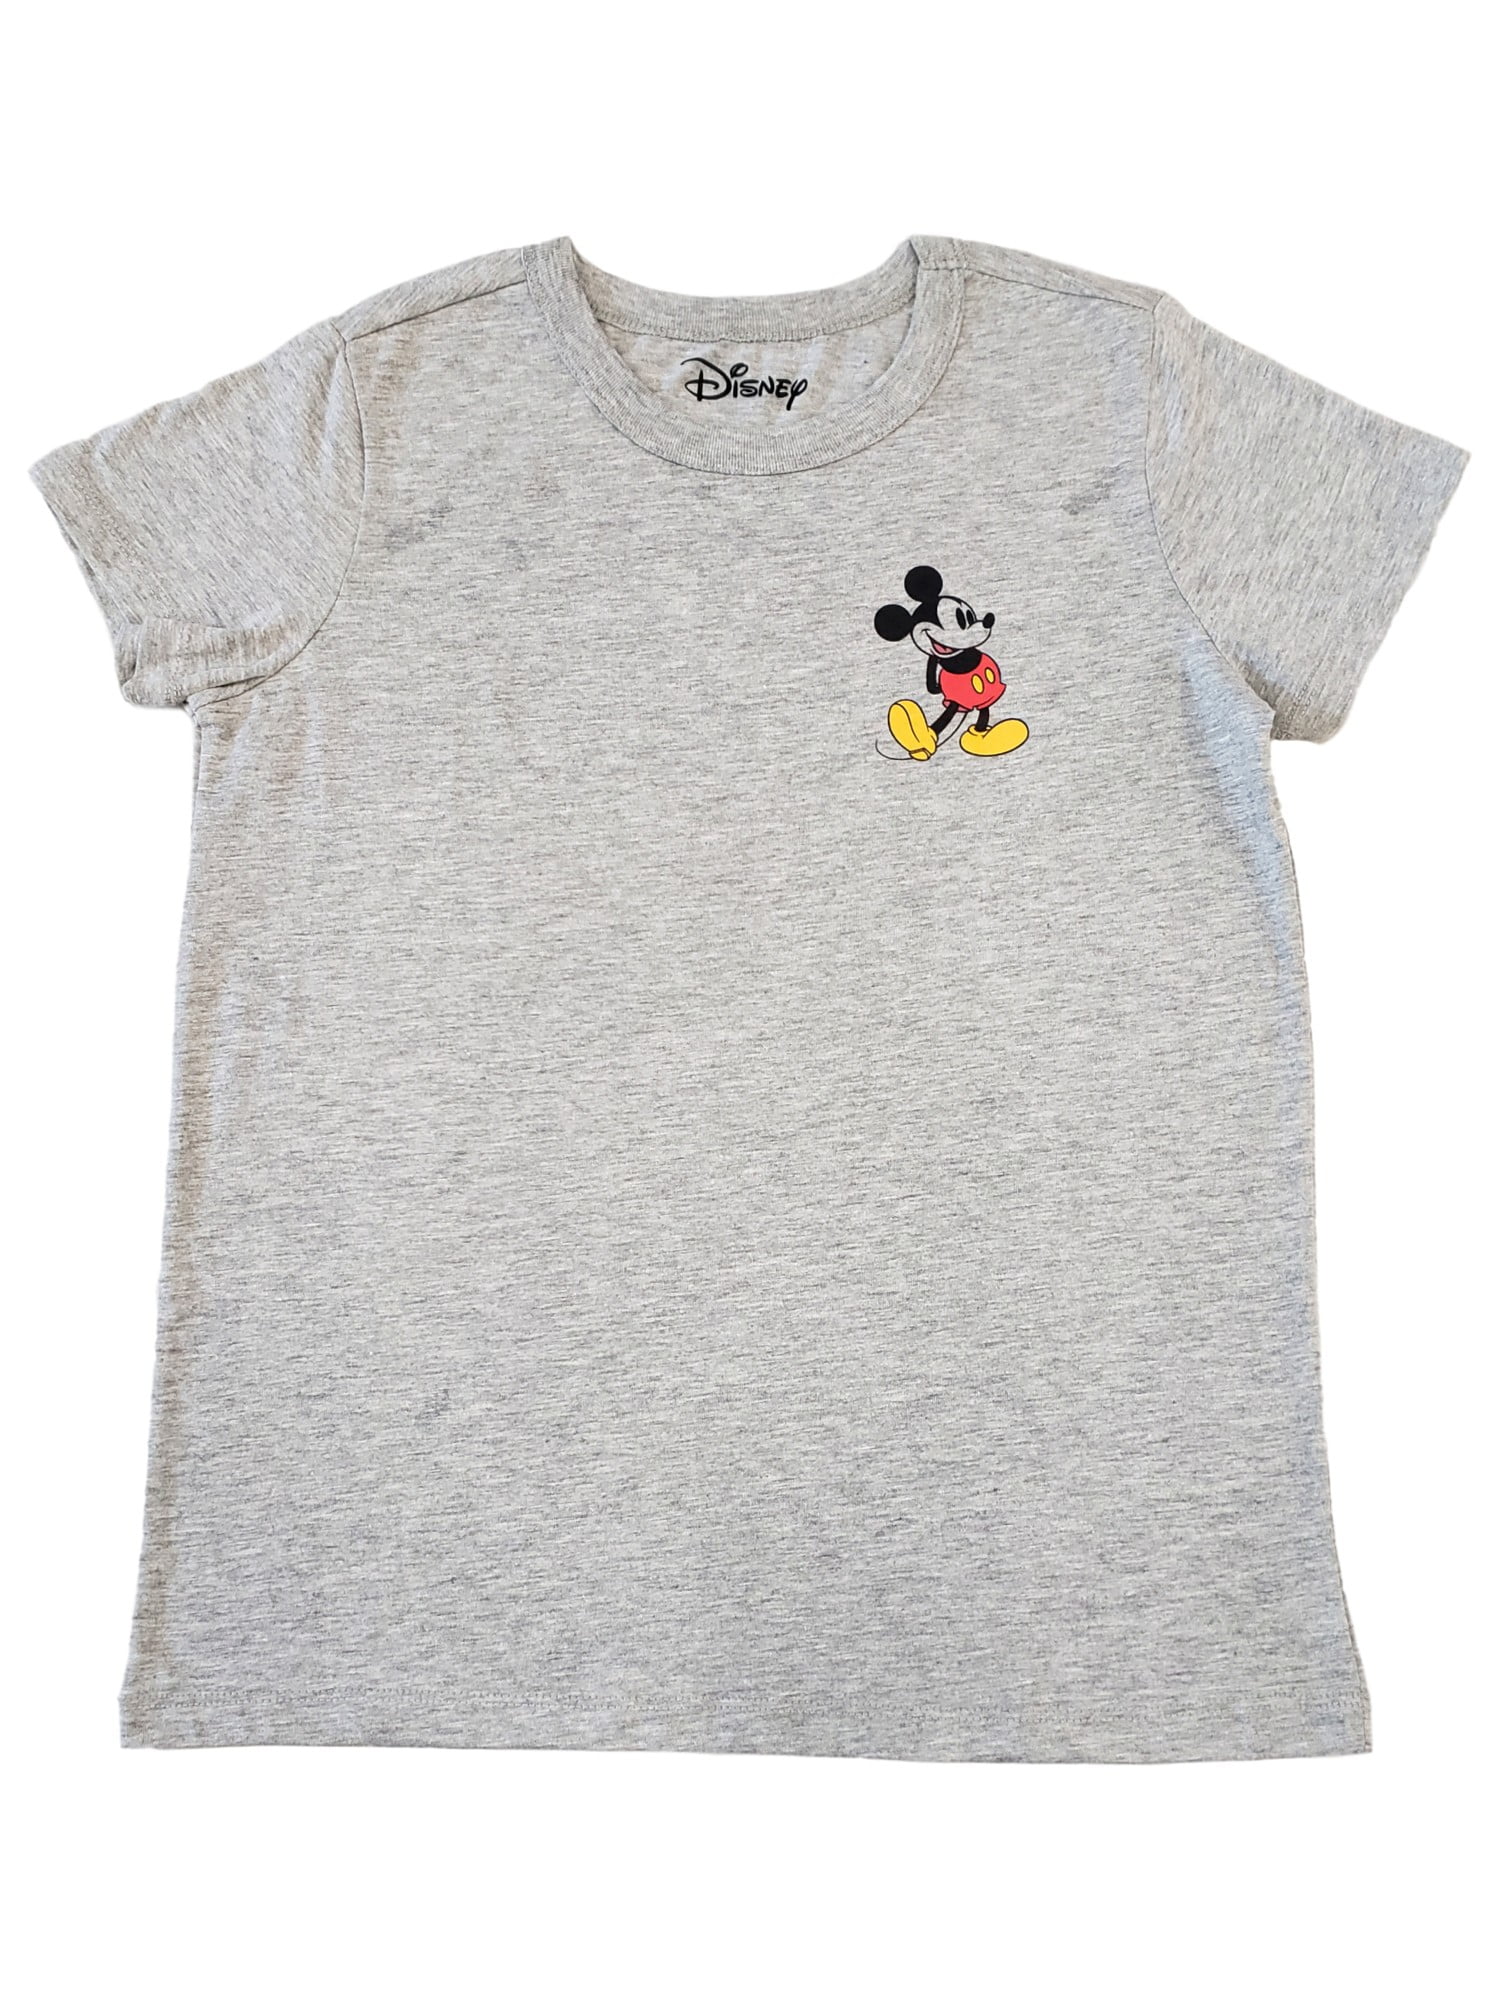 Vintage Disney Mickey Mouse Rainbow Happy Shirt Yellow Short Sleeve Baby Tee Women\u2019s XS